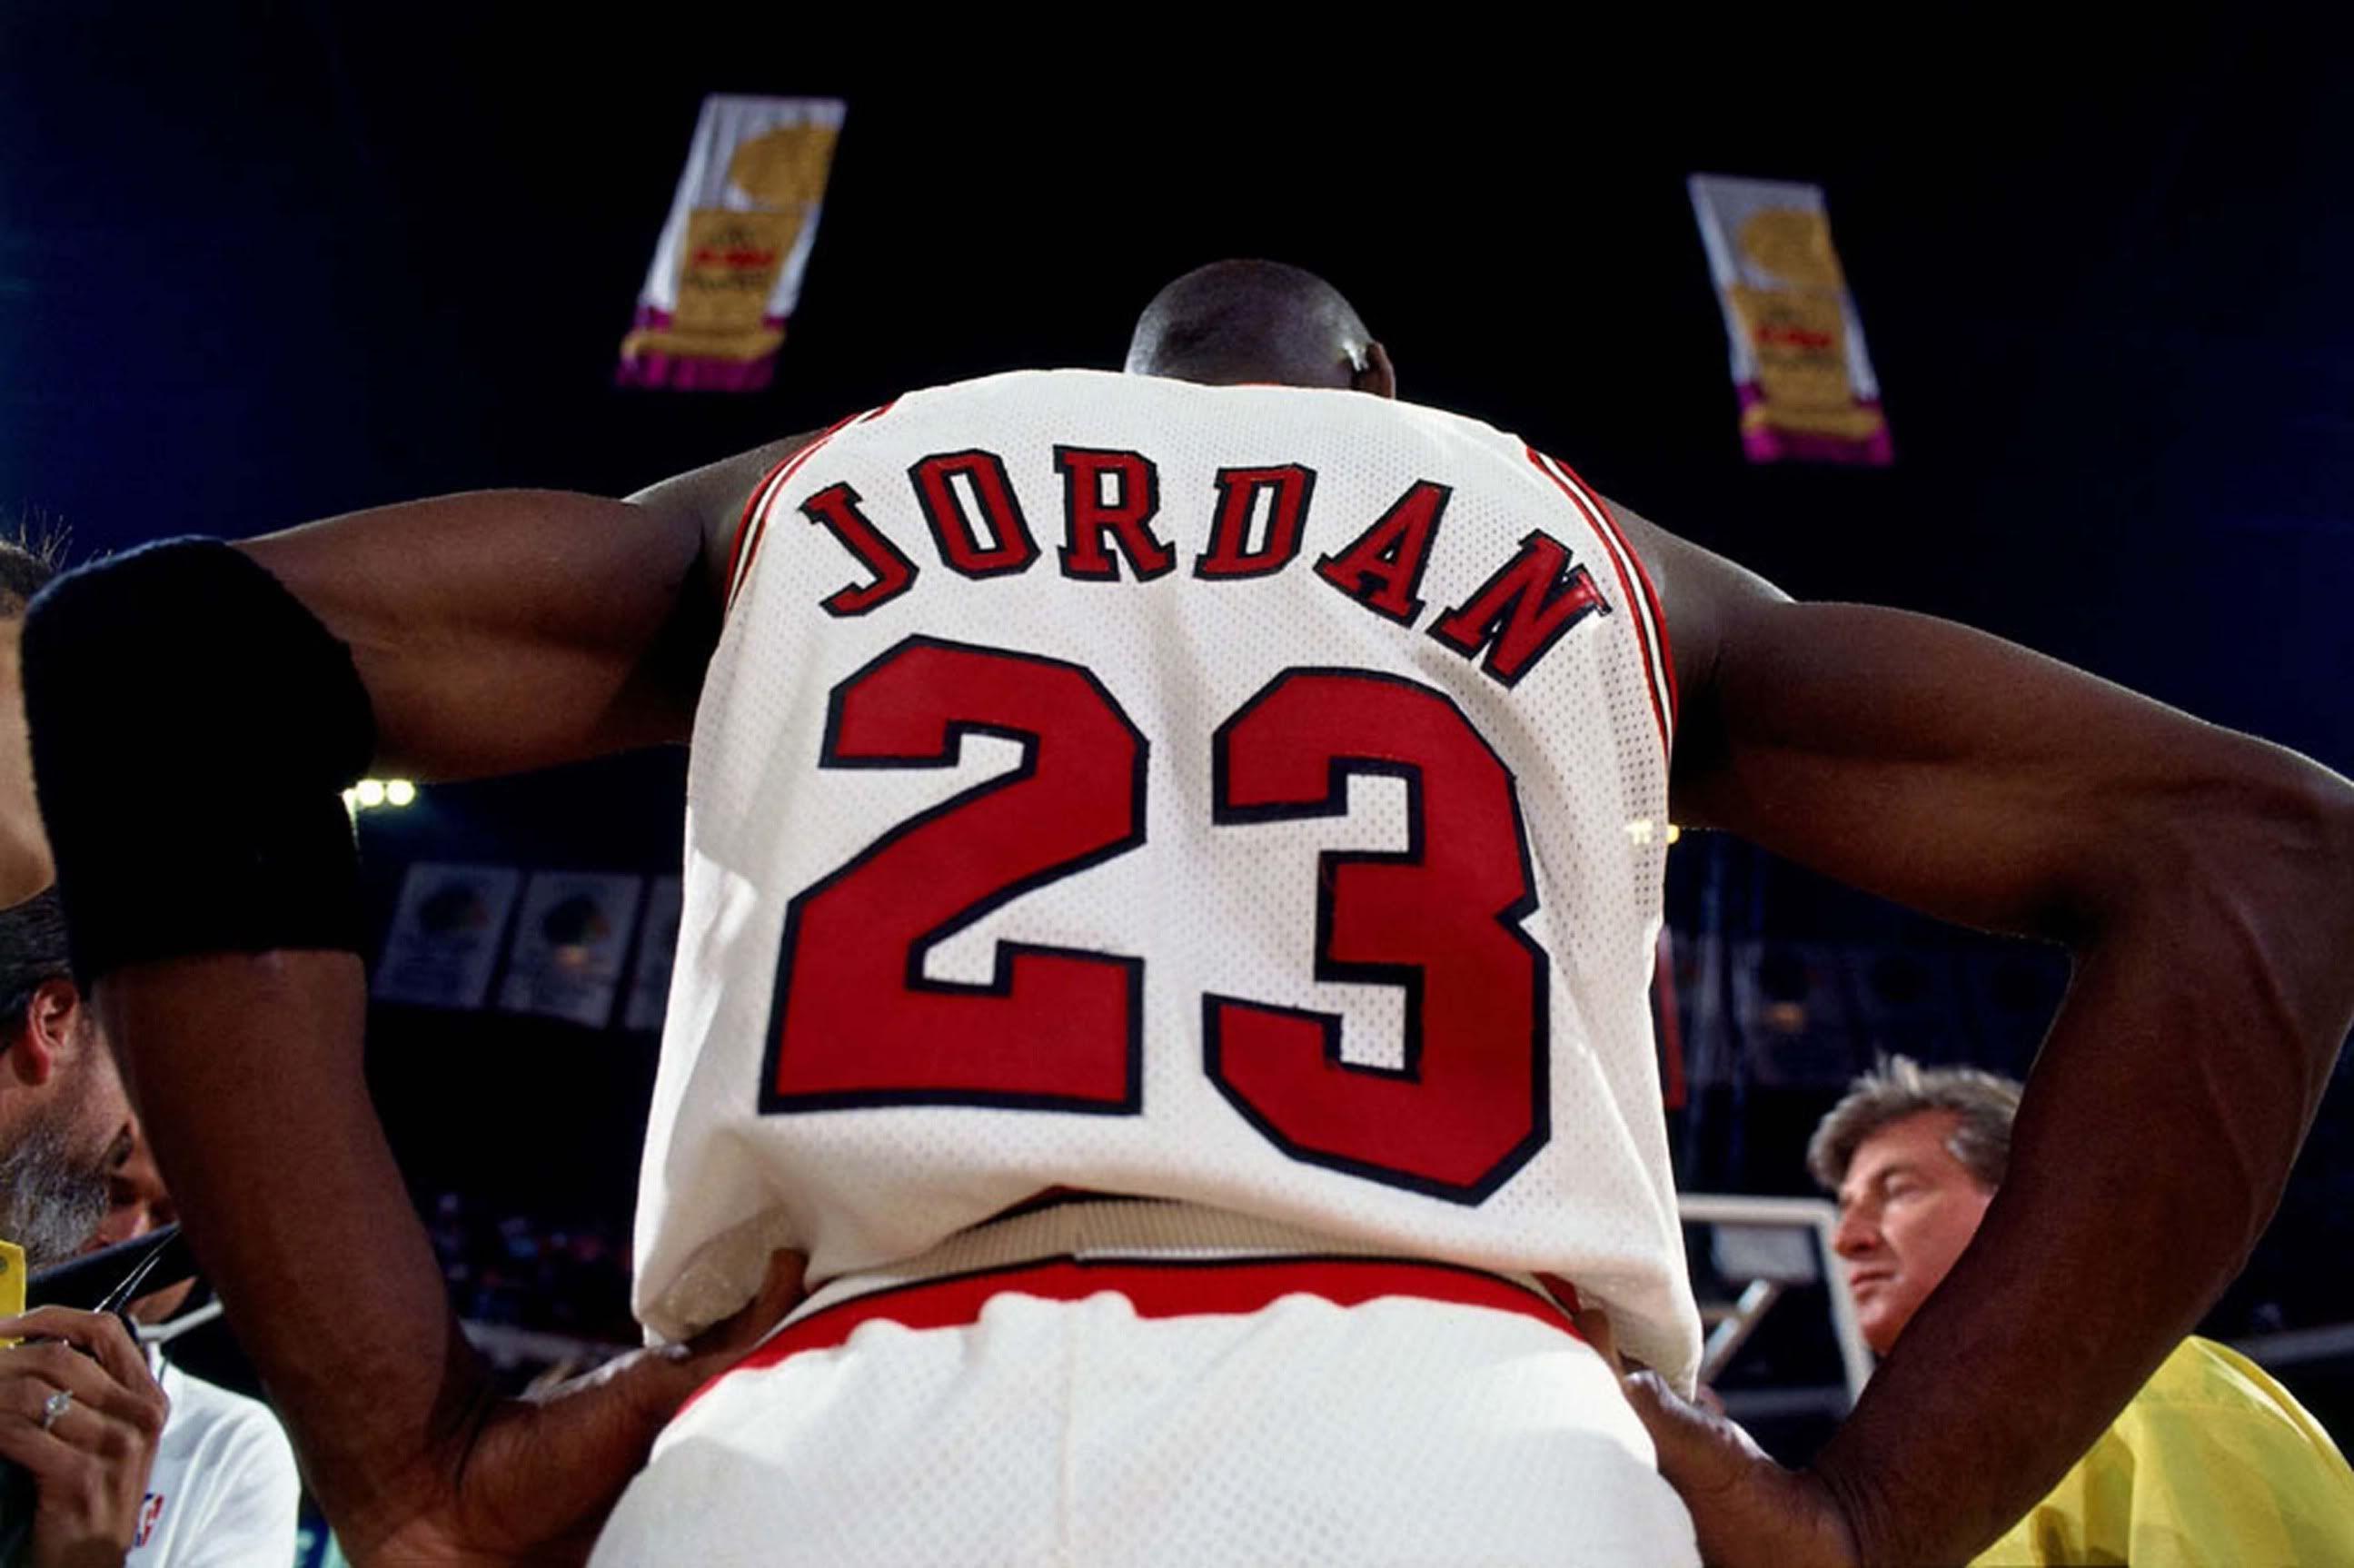 Michael Jordan 34 116130 Image HD Wallpaper. Wallfoy.com